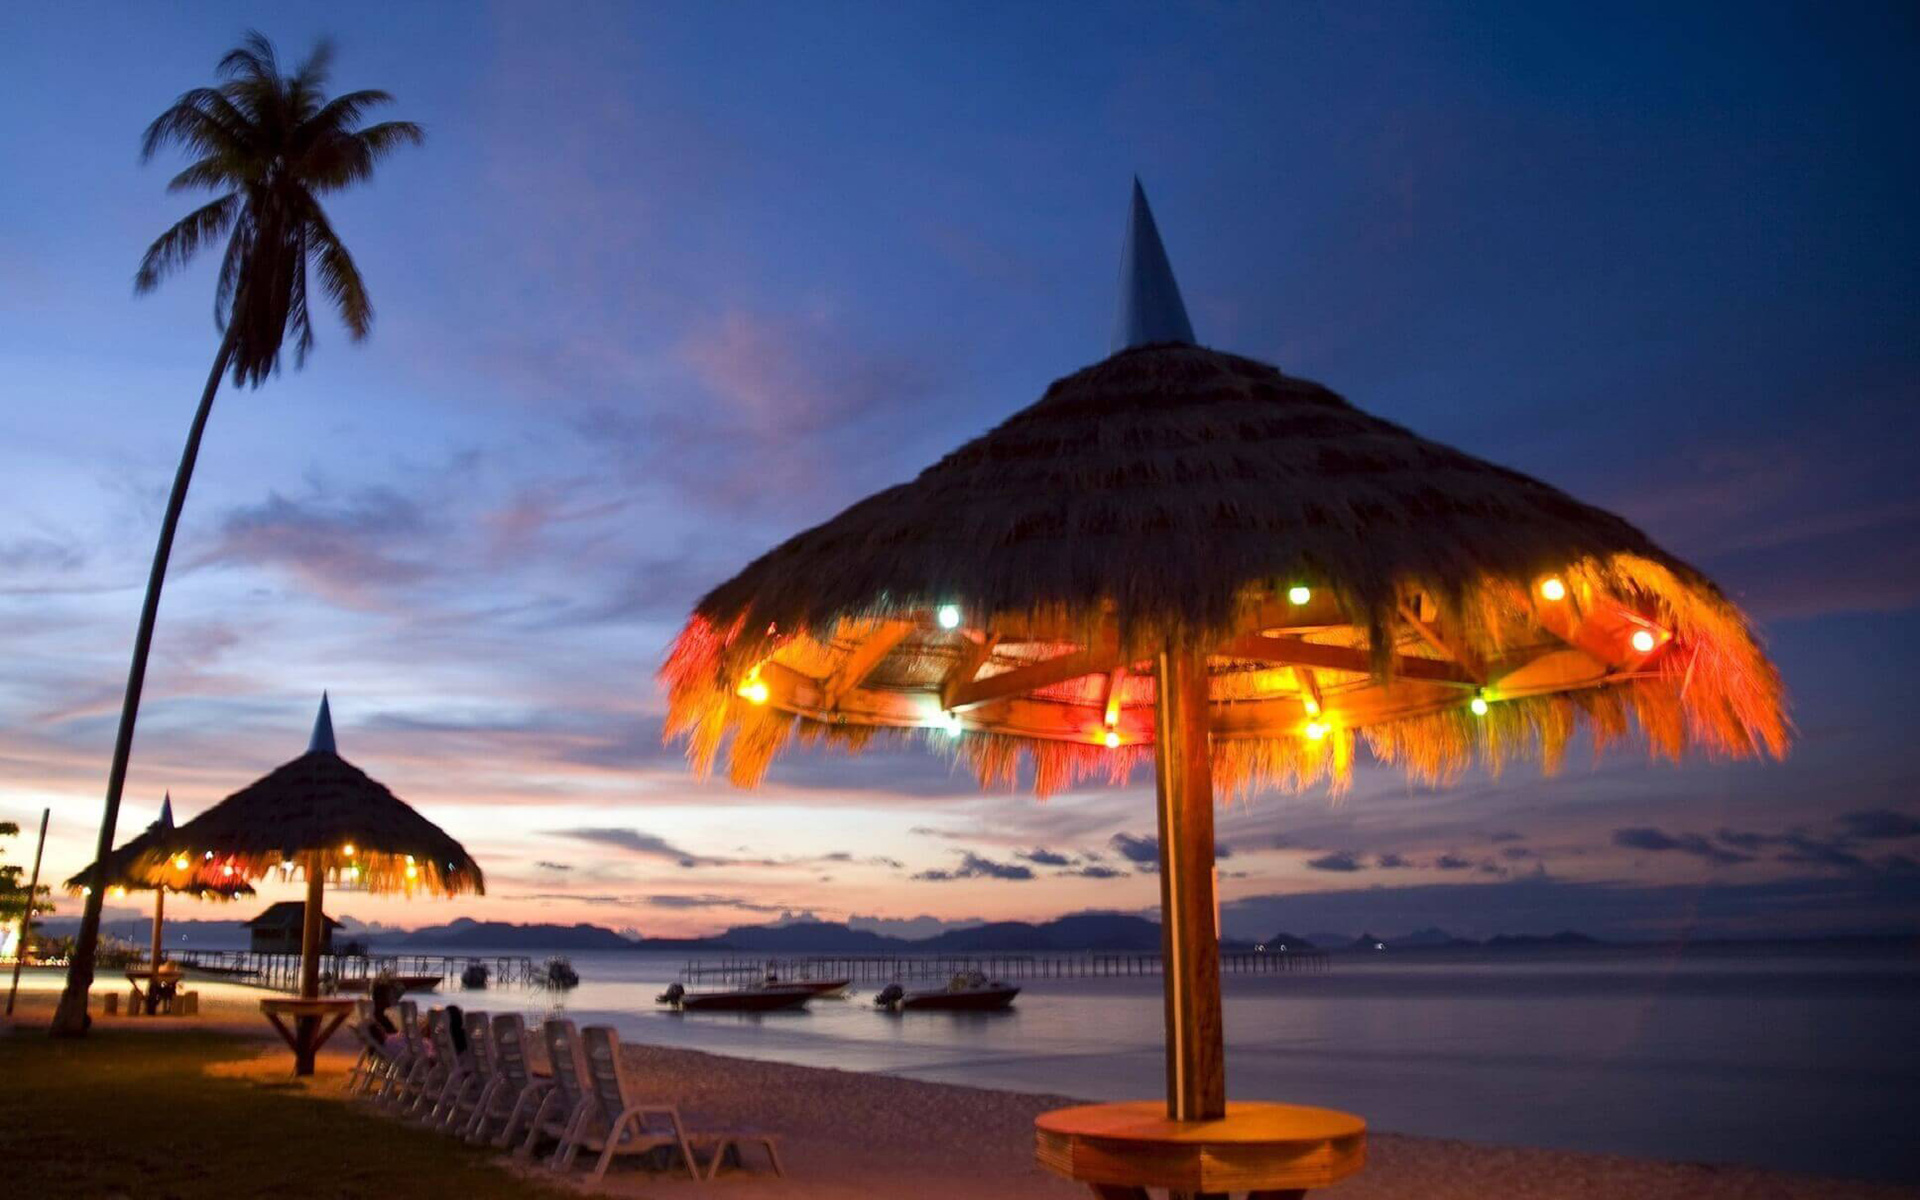 Malaysia Night Beach Hut Wooden Umbrellas Straw Romantic Hd